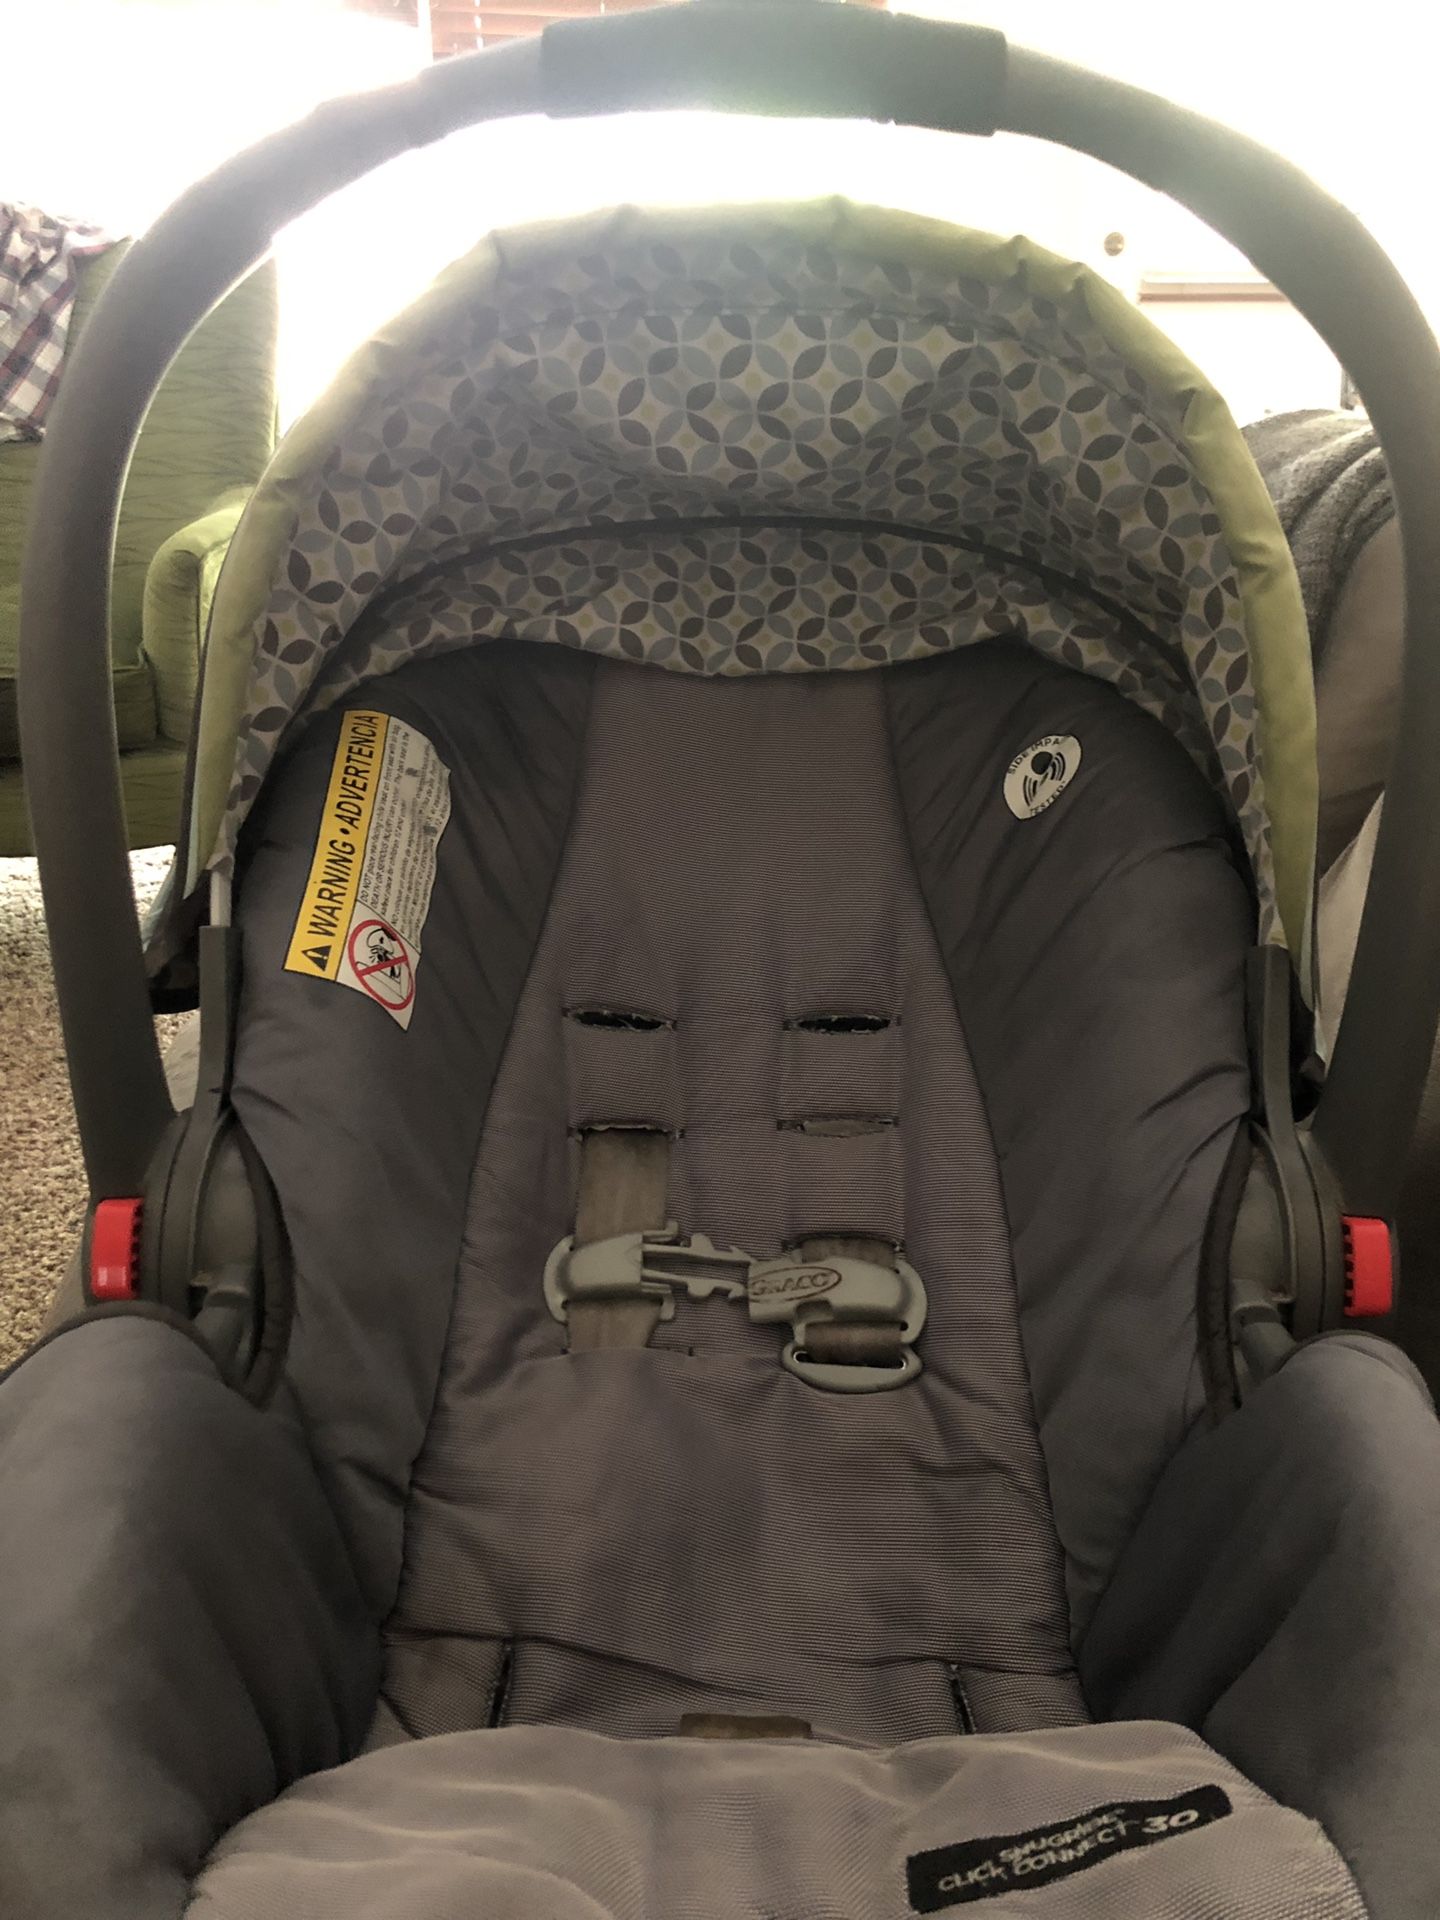 Graco snug ride infant car seat